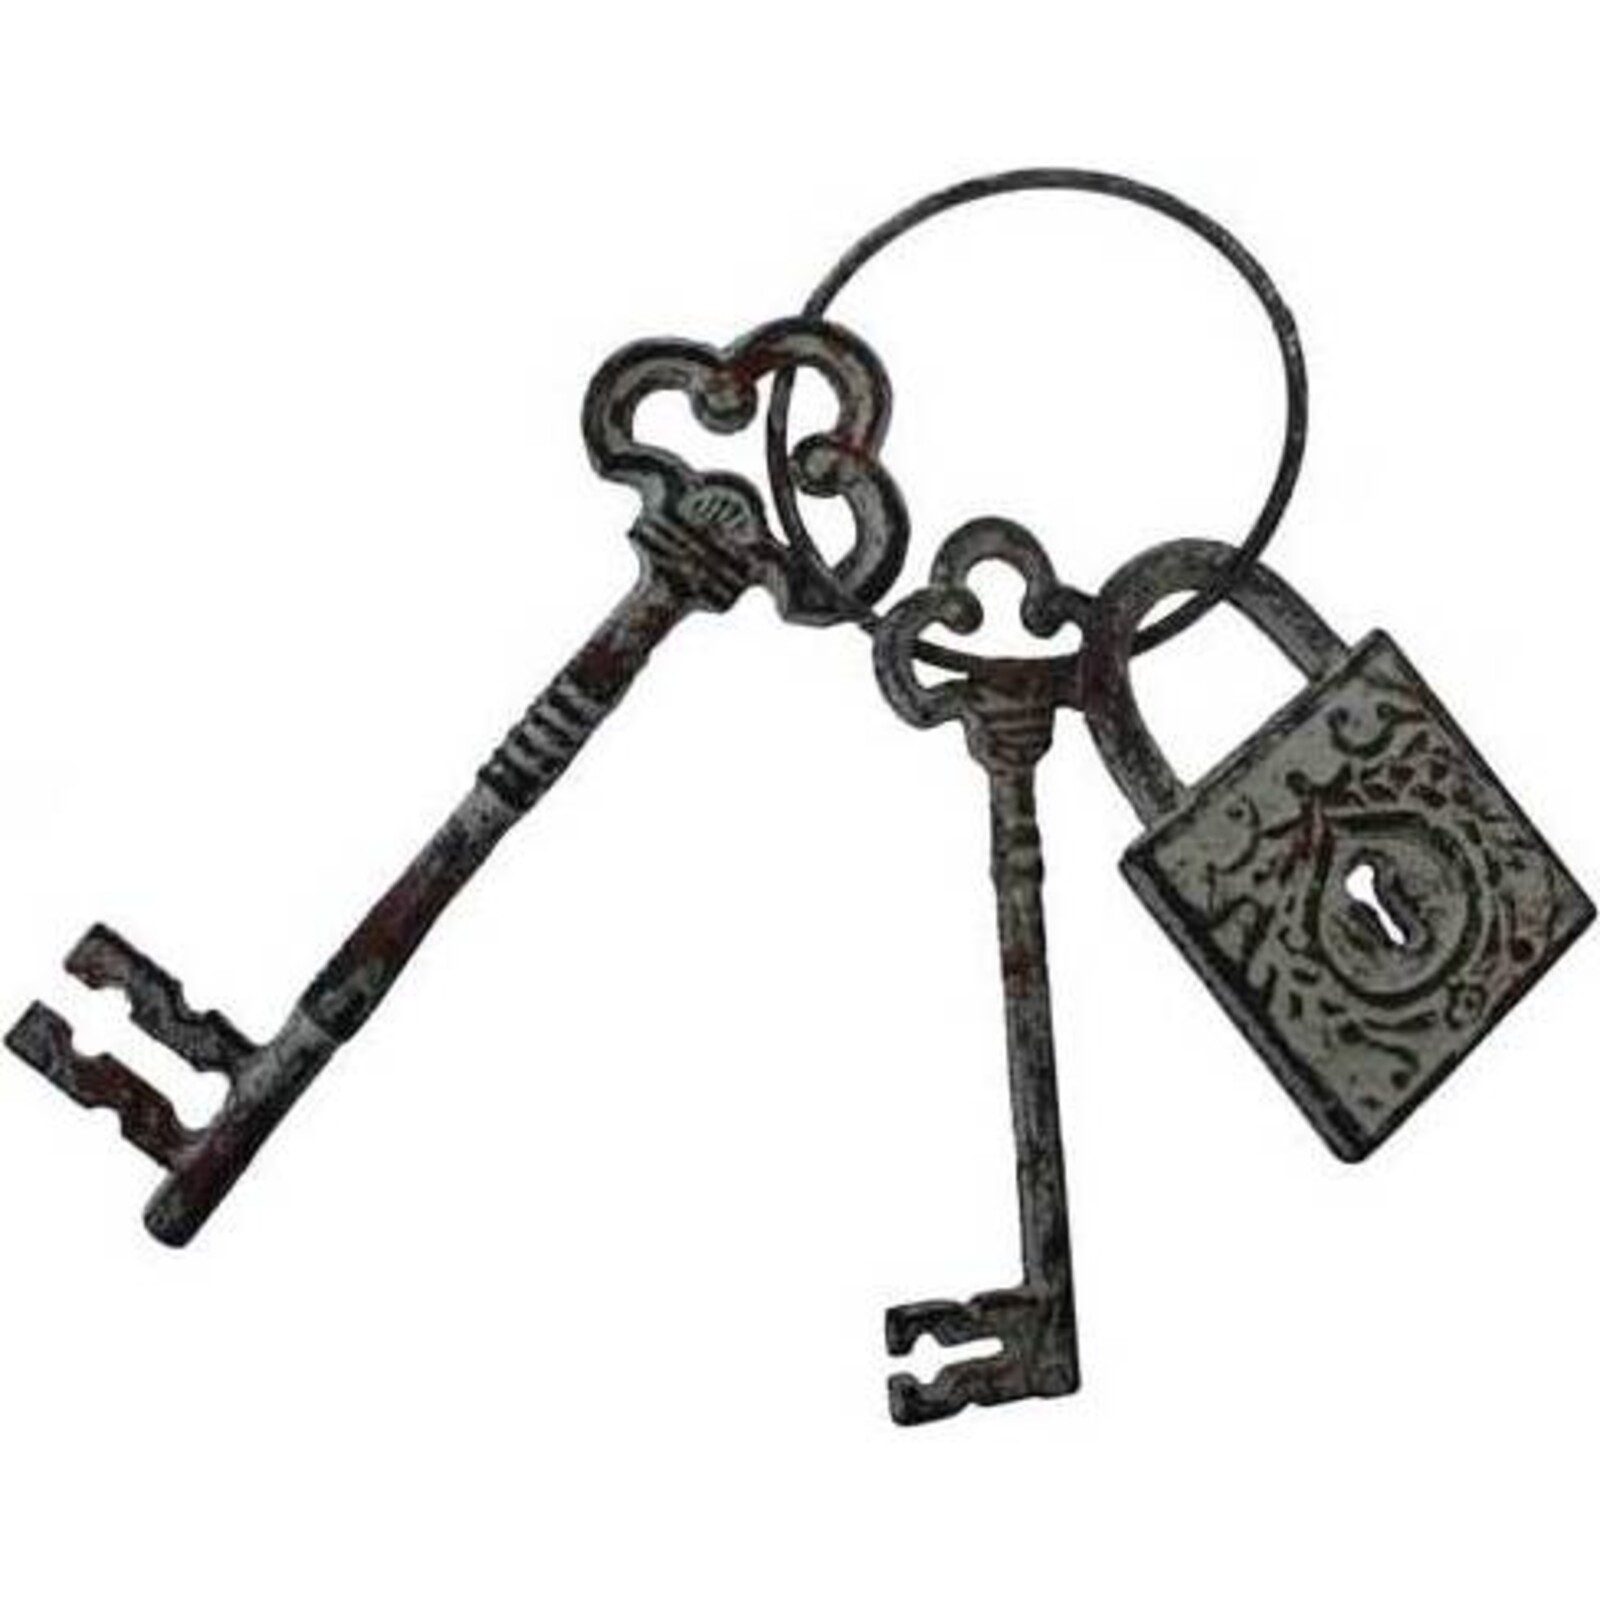 Keys on Ring - Rustic Padlock